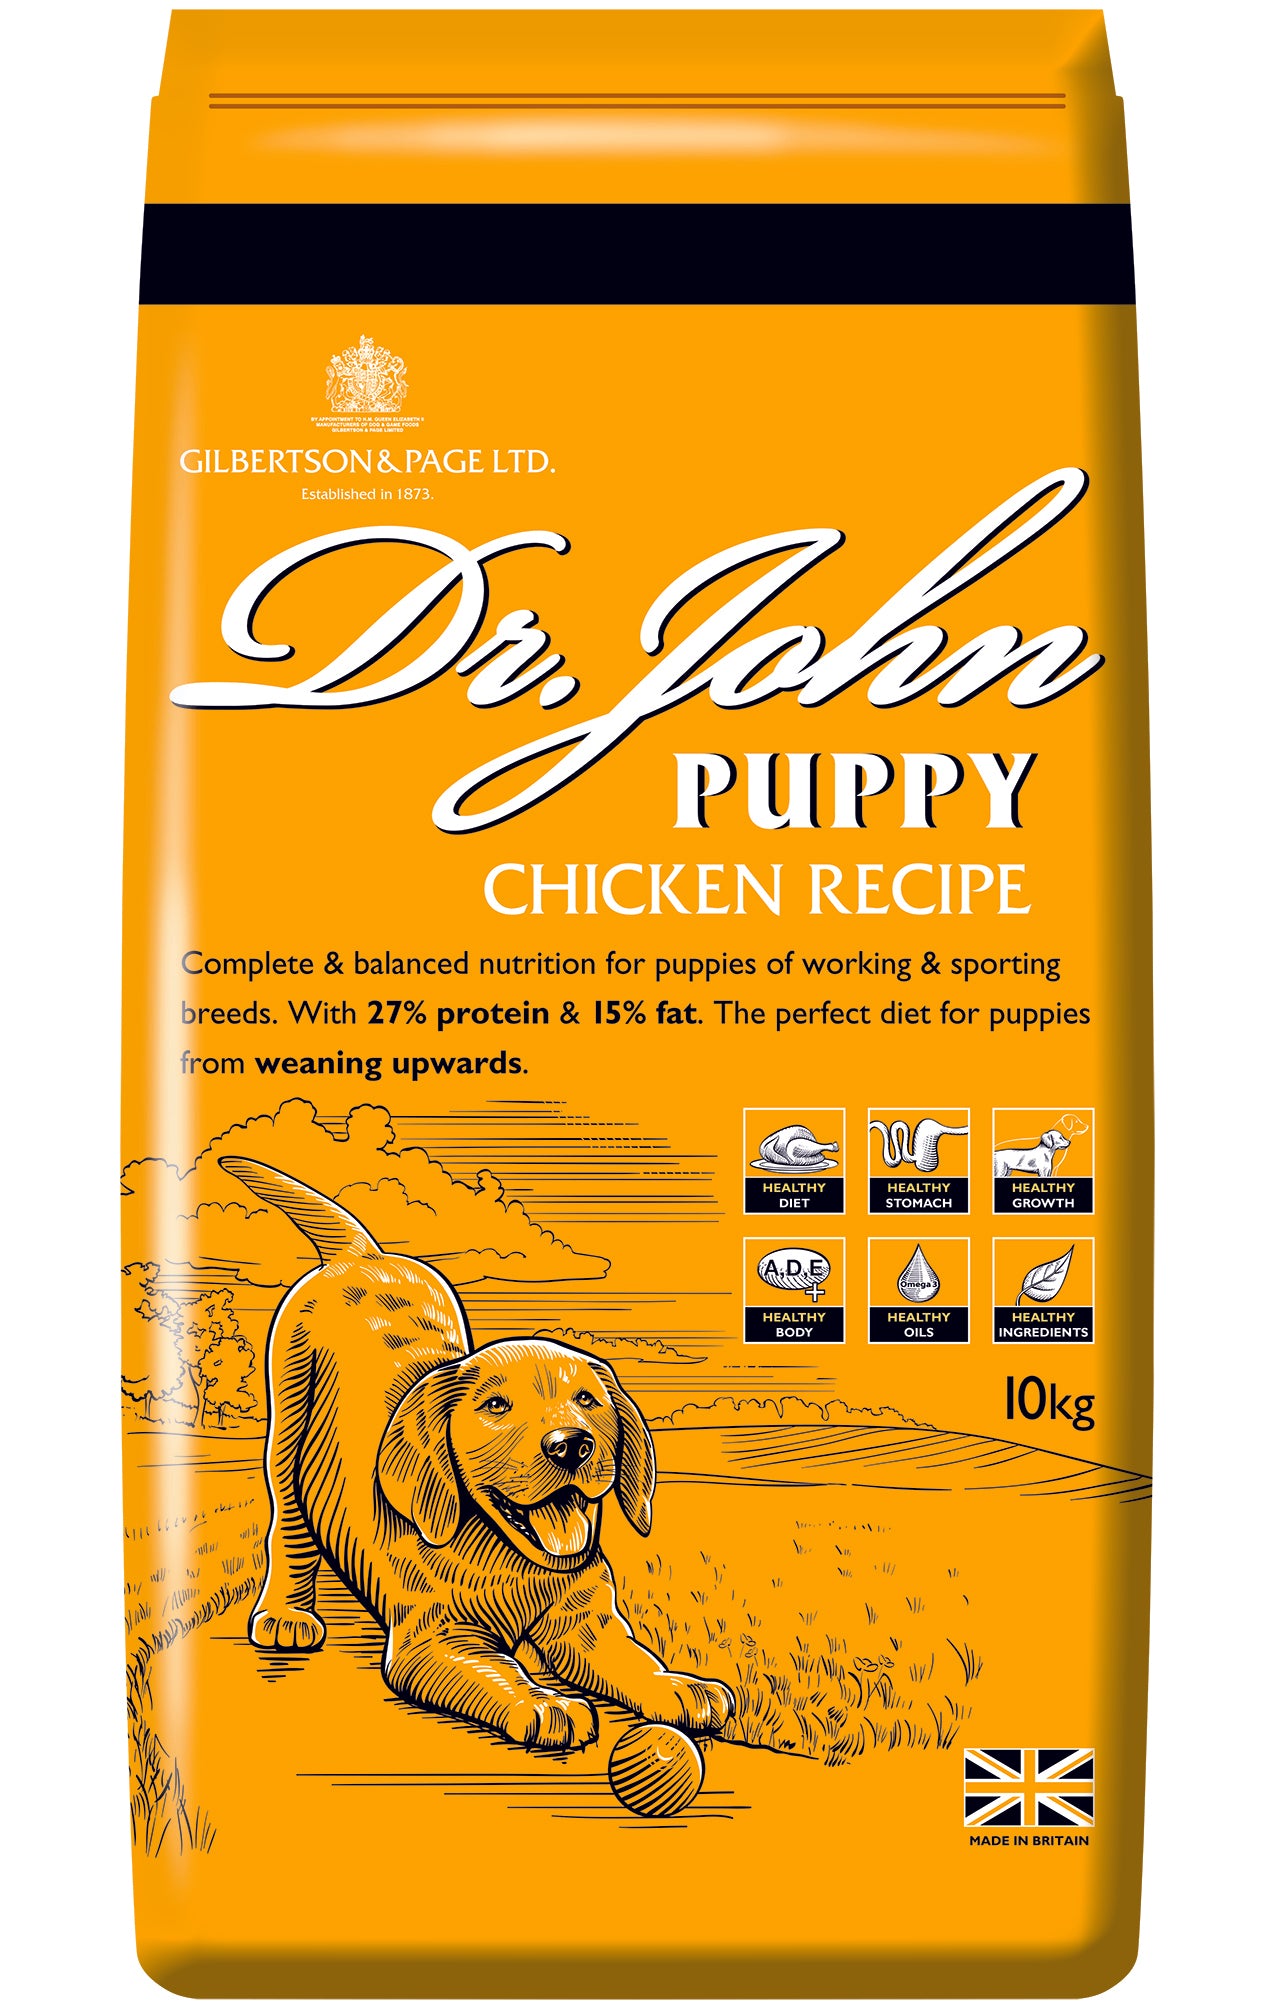 Dr John Puppy Chicken Recipe